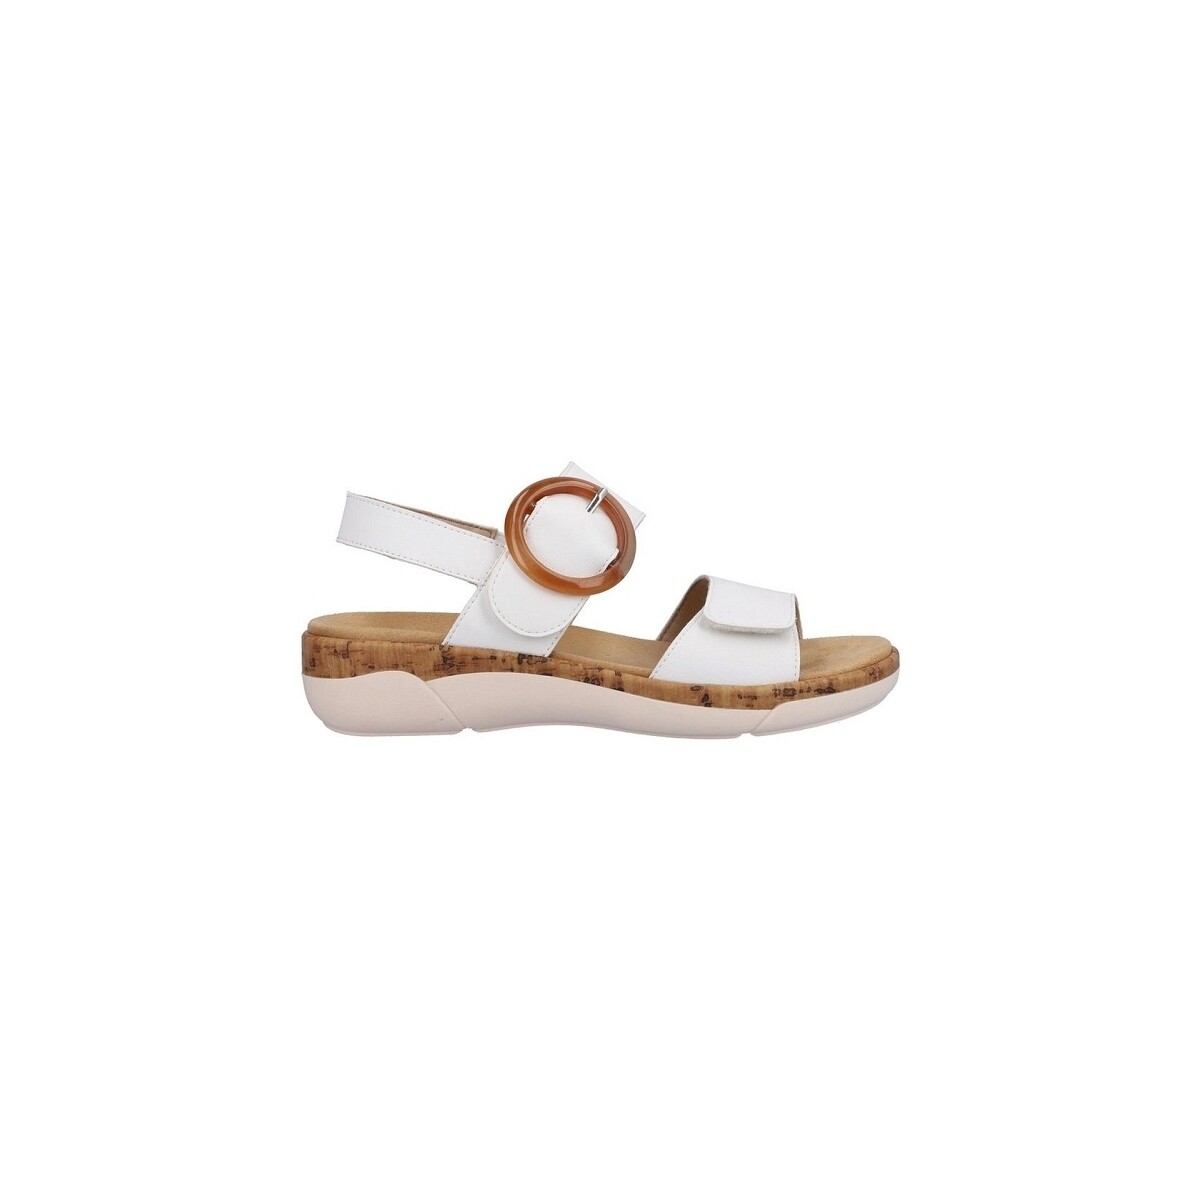 Sapatos Mulher Sandálias Remonte R6853 Branco